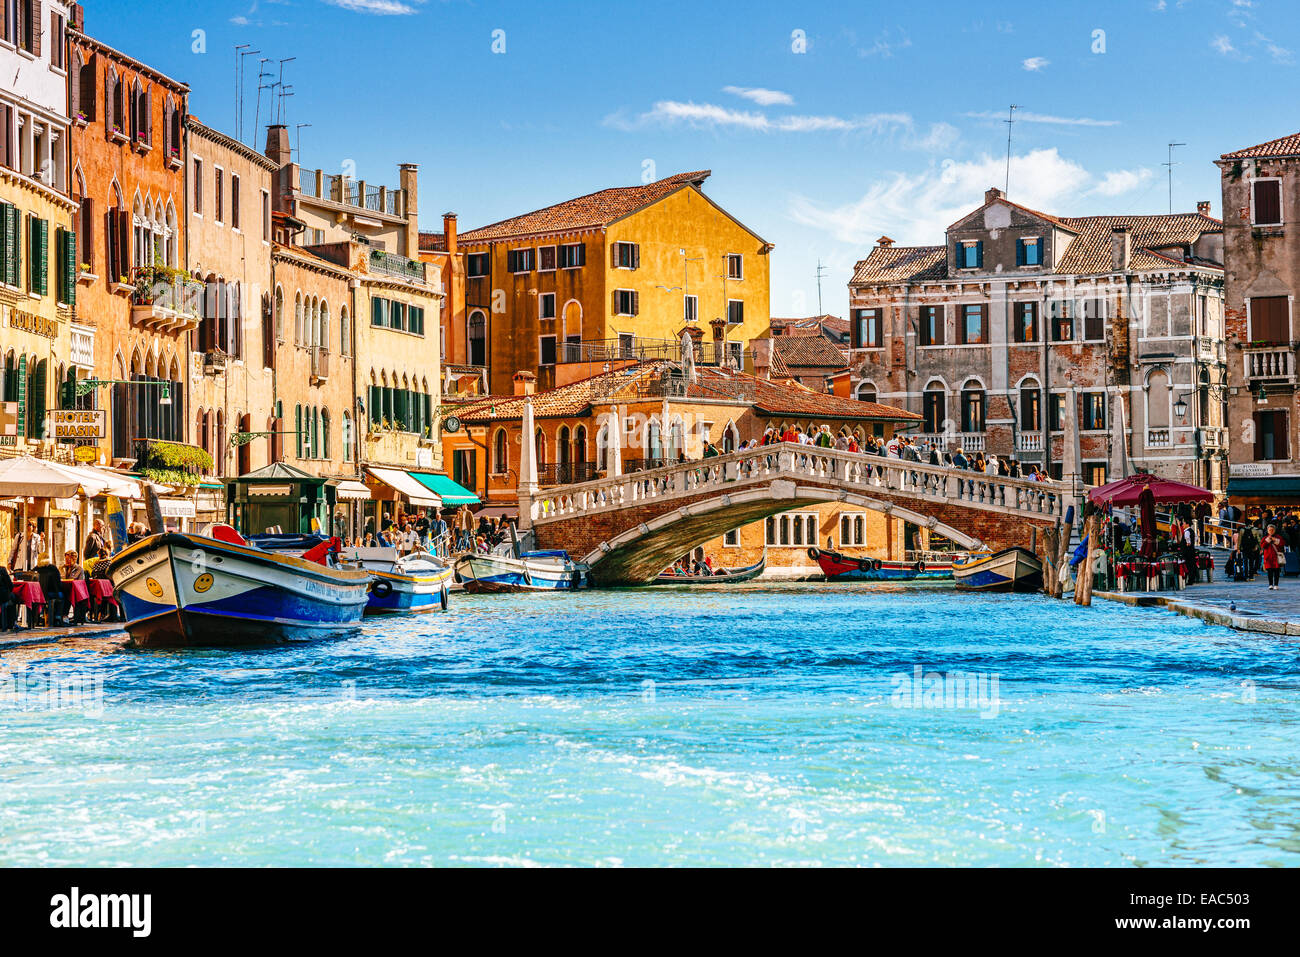 VENICE, ITALY - 26 OCTOBER 2014: Ponte delle Guglie (Bridge of Spires) in Venice, Italy. It is the only bridge in Venice adorned Stock Photo